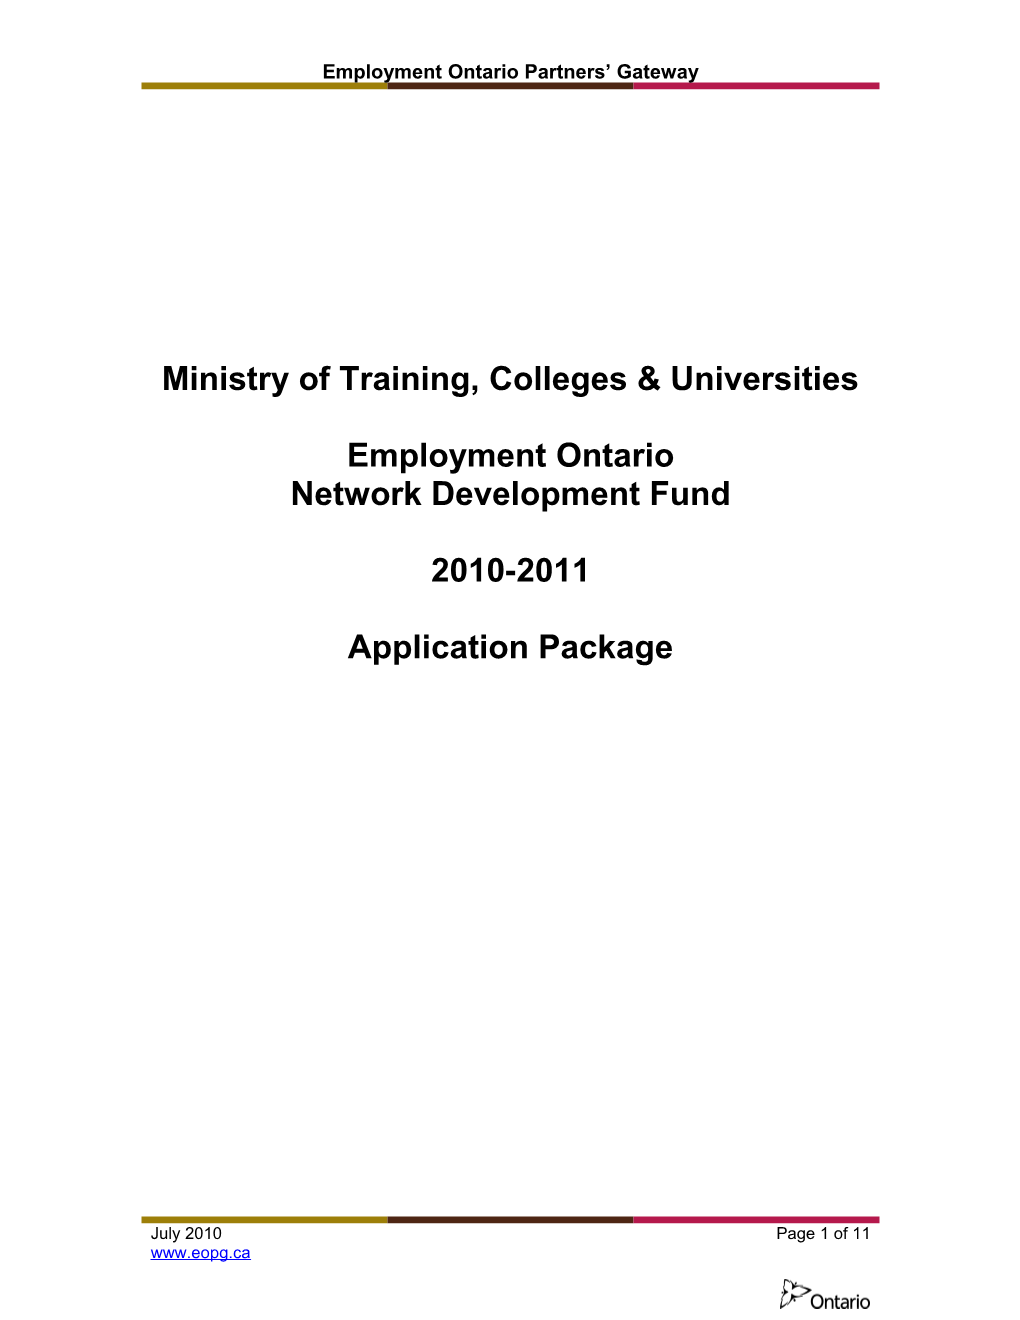 Employment Ontario Network Development Fund Application Package